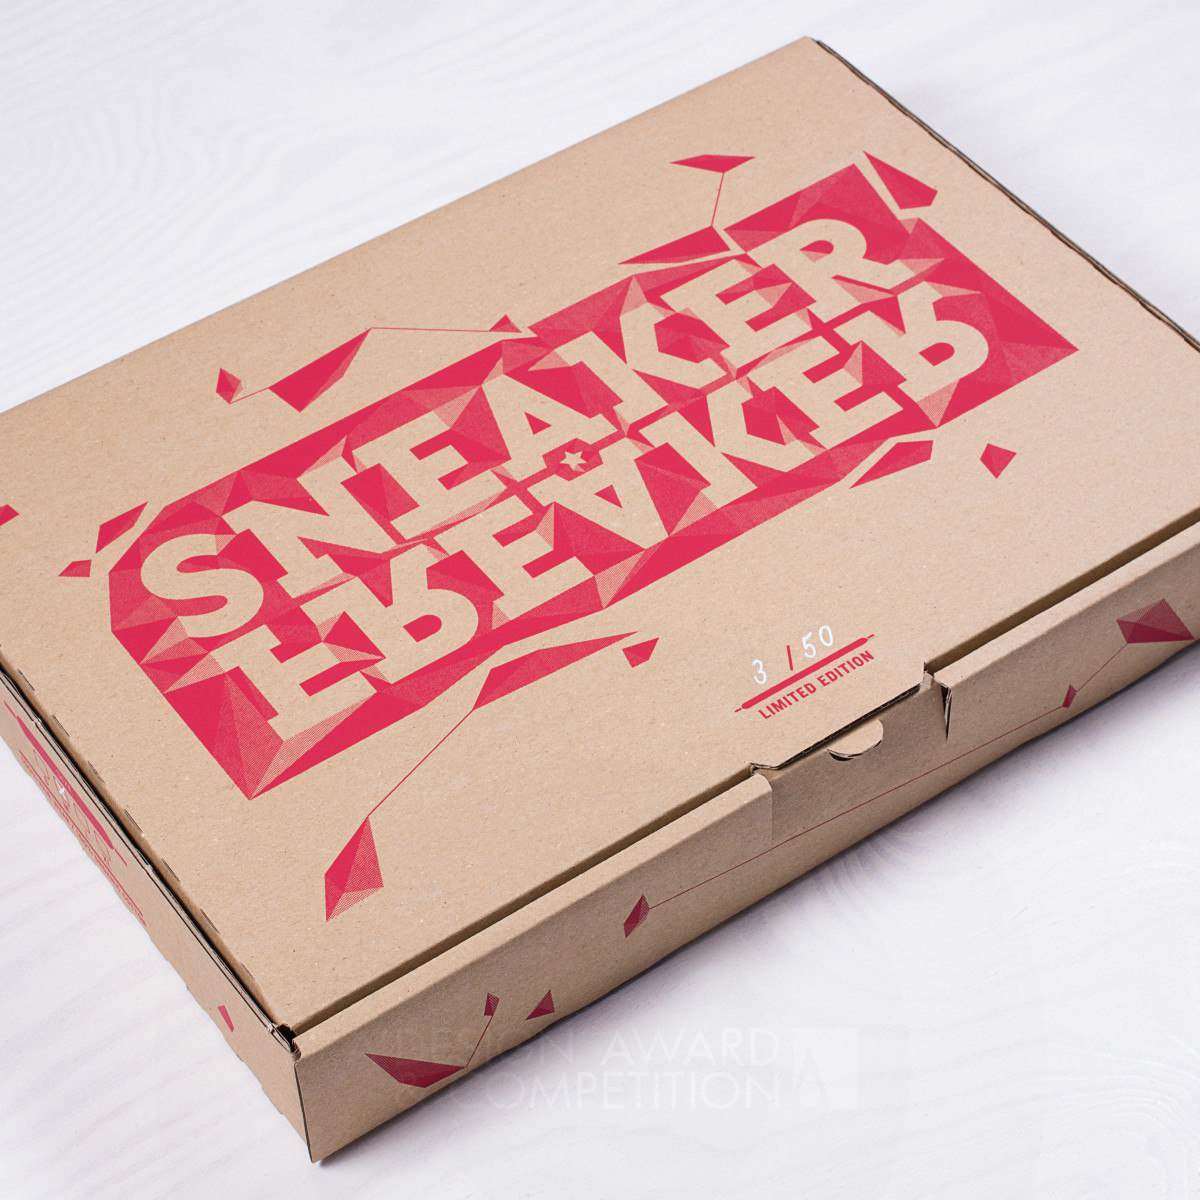 Sneaker Freaker <b>Limited Edition T-Shirt Packaging